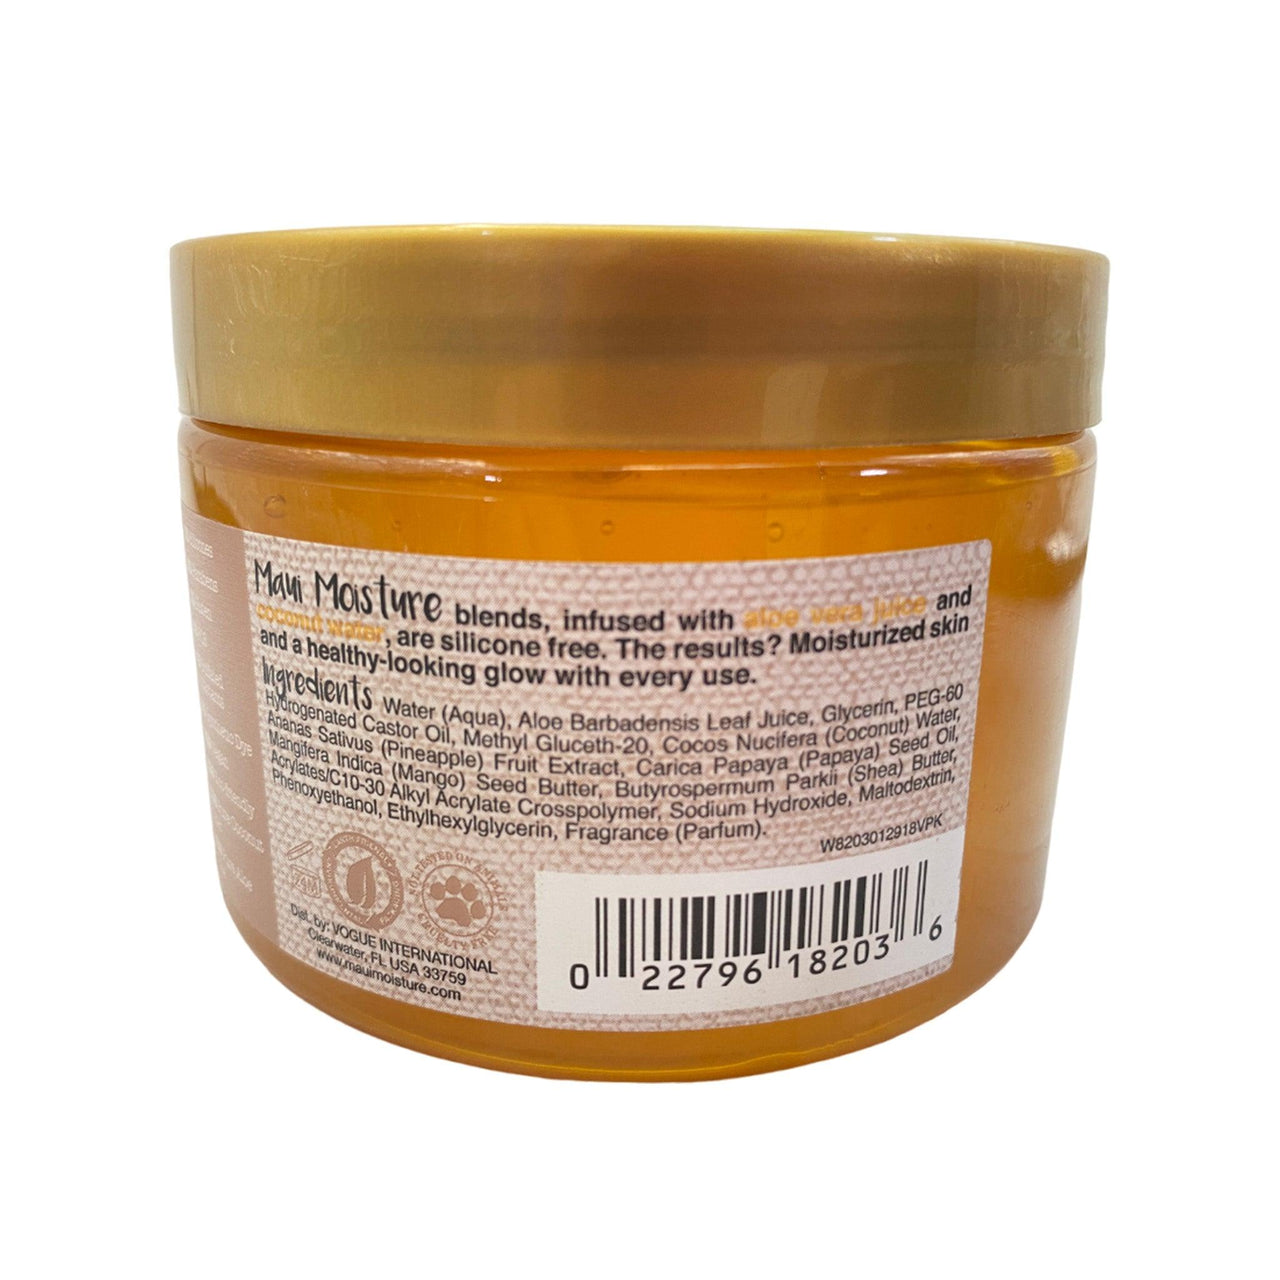 Maui Moisture Body Care Papaya Butter, Pineapple Extract & Mango Butter (50 Pcs Box) - Discount Wholesalers Inc